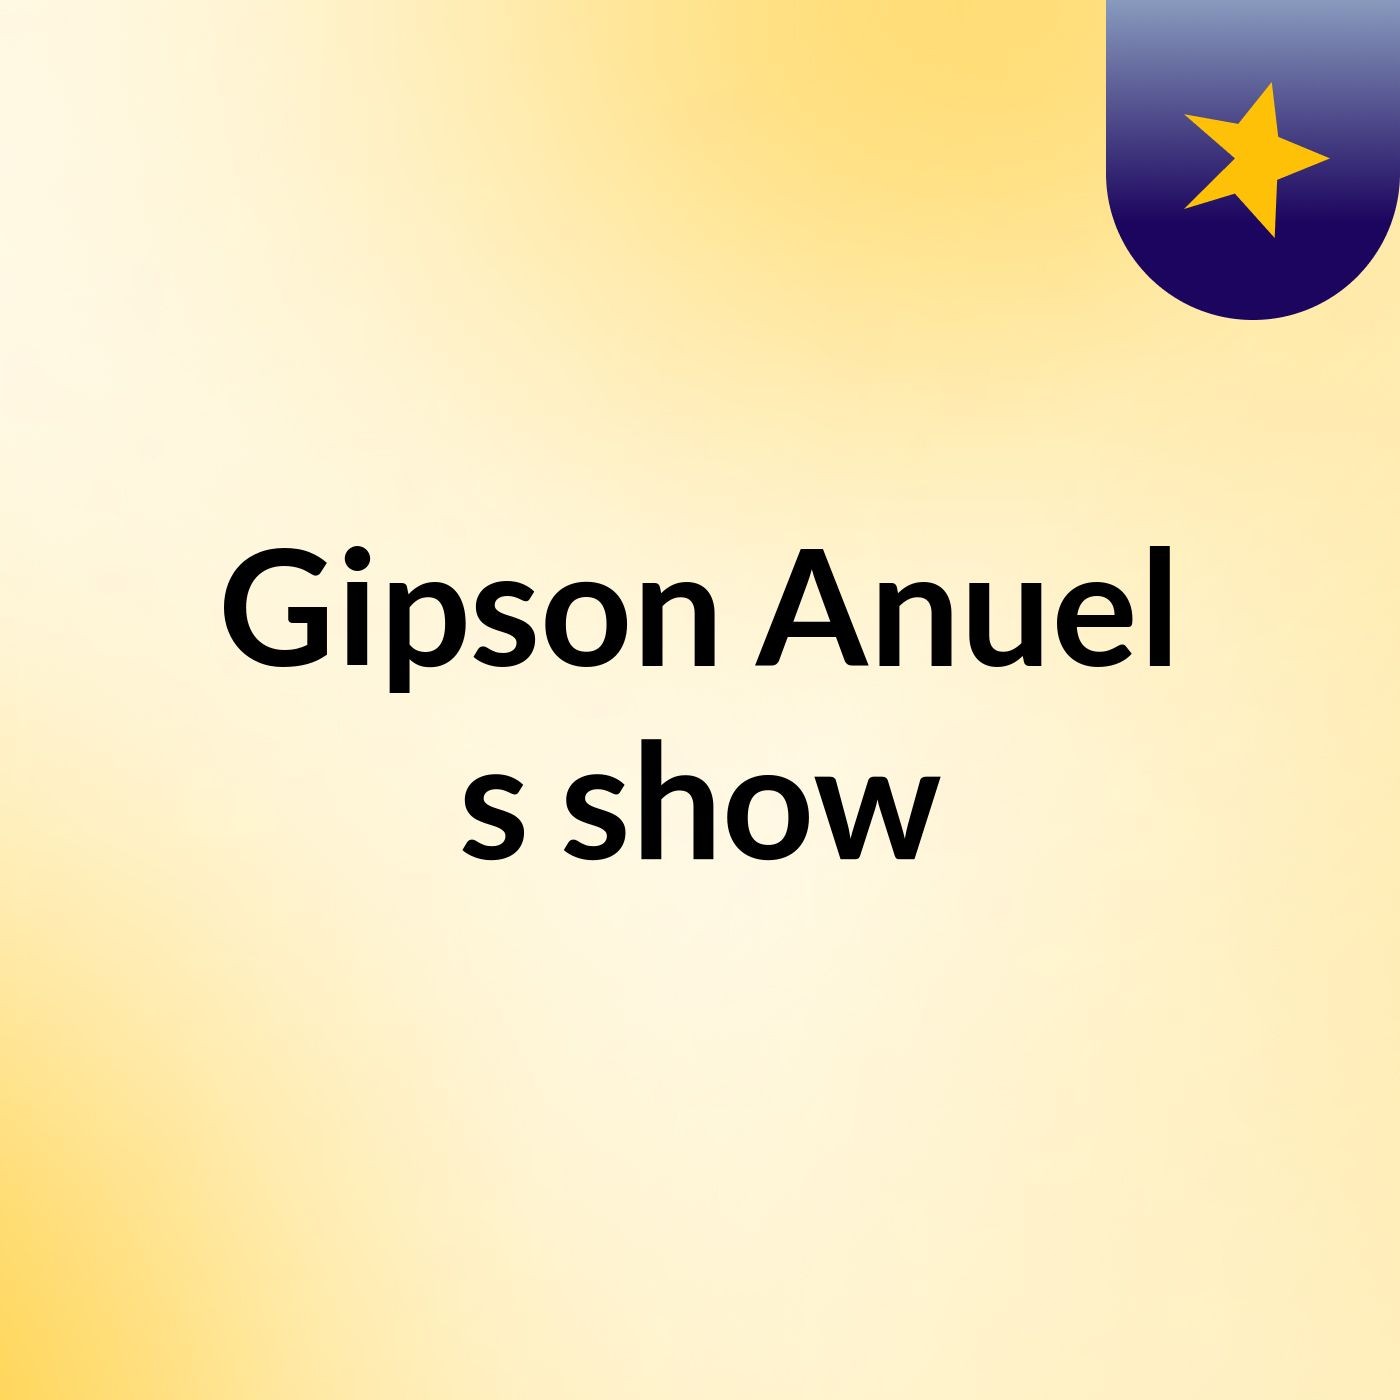 Gipson Anuel's show